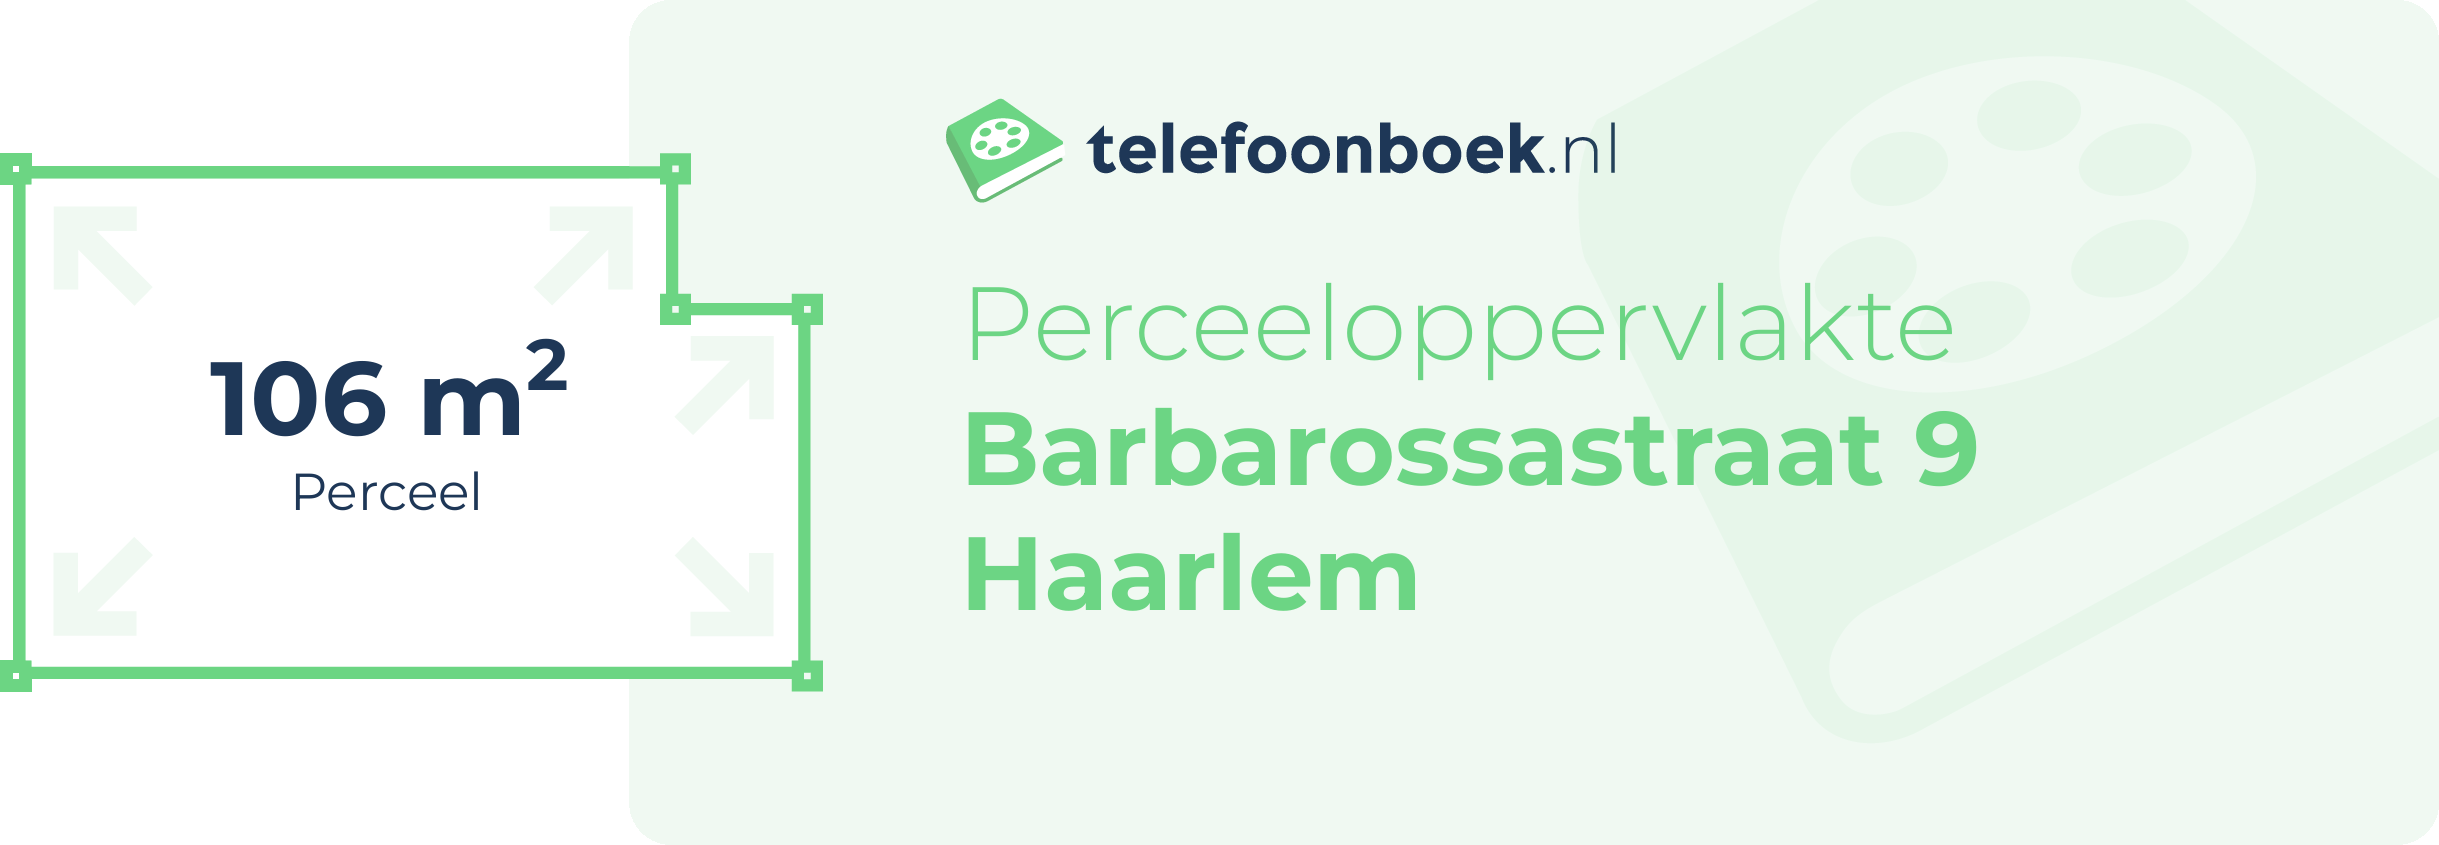 Perceeloppervlakte Barbarossastraat 9 Haarlem